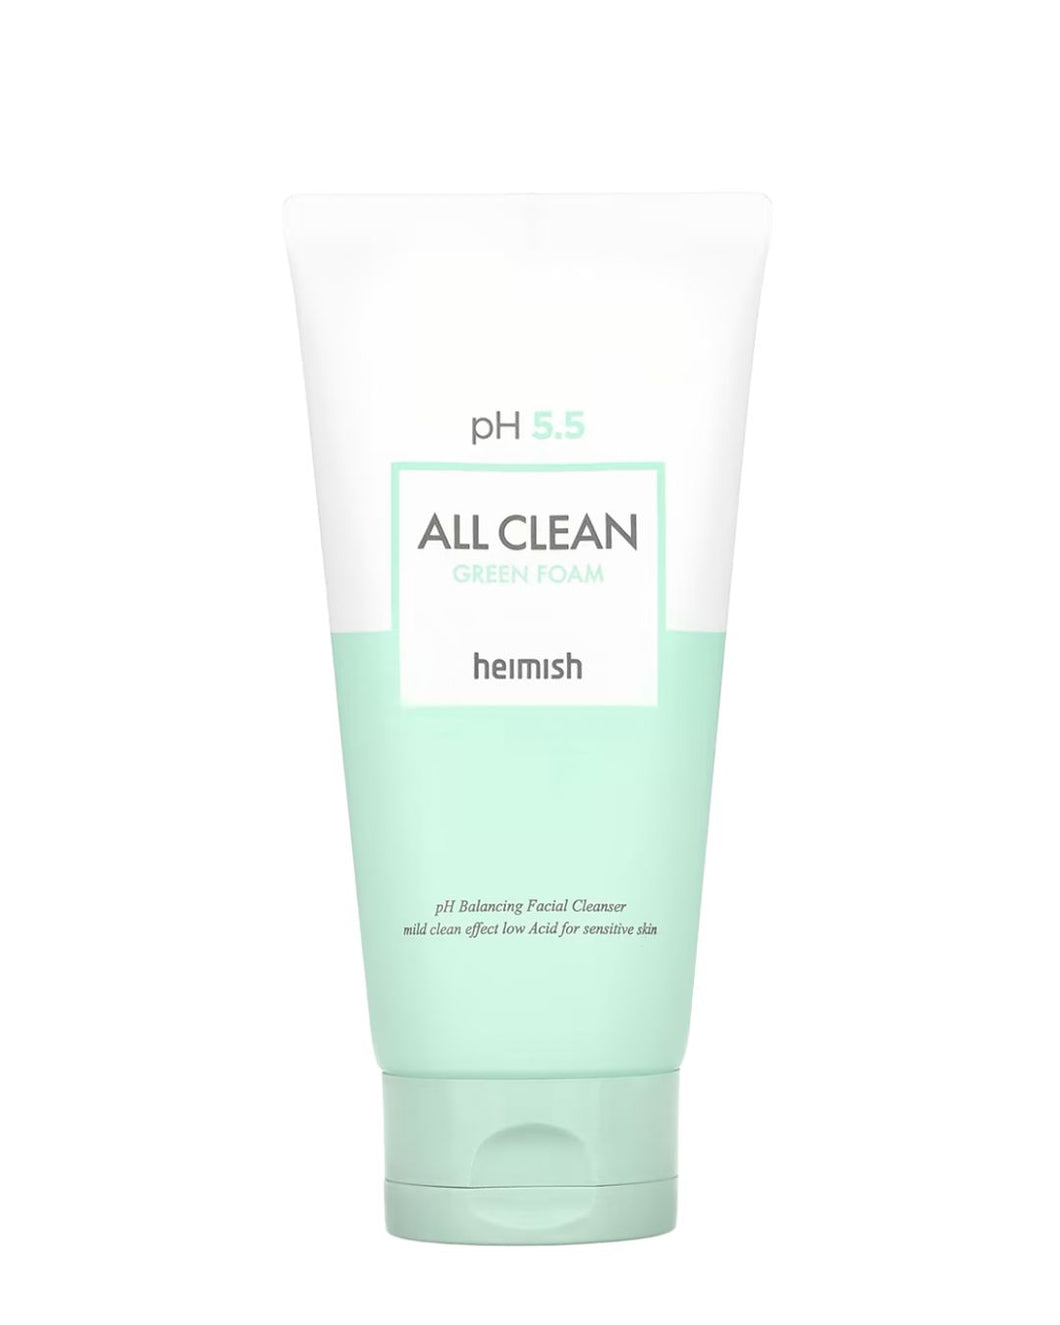 HEIMISH - All Clean Green Foam